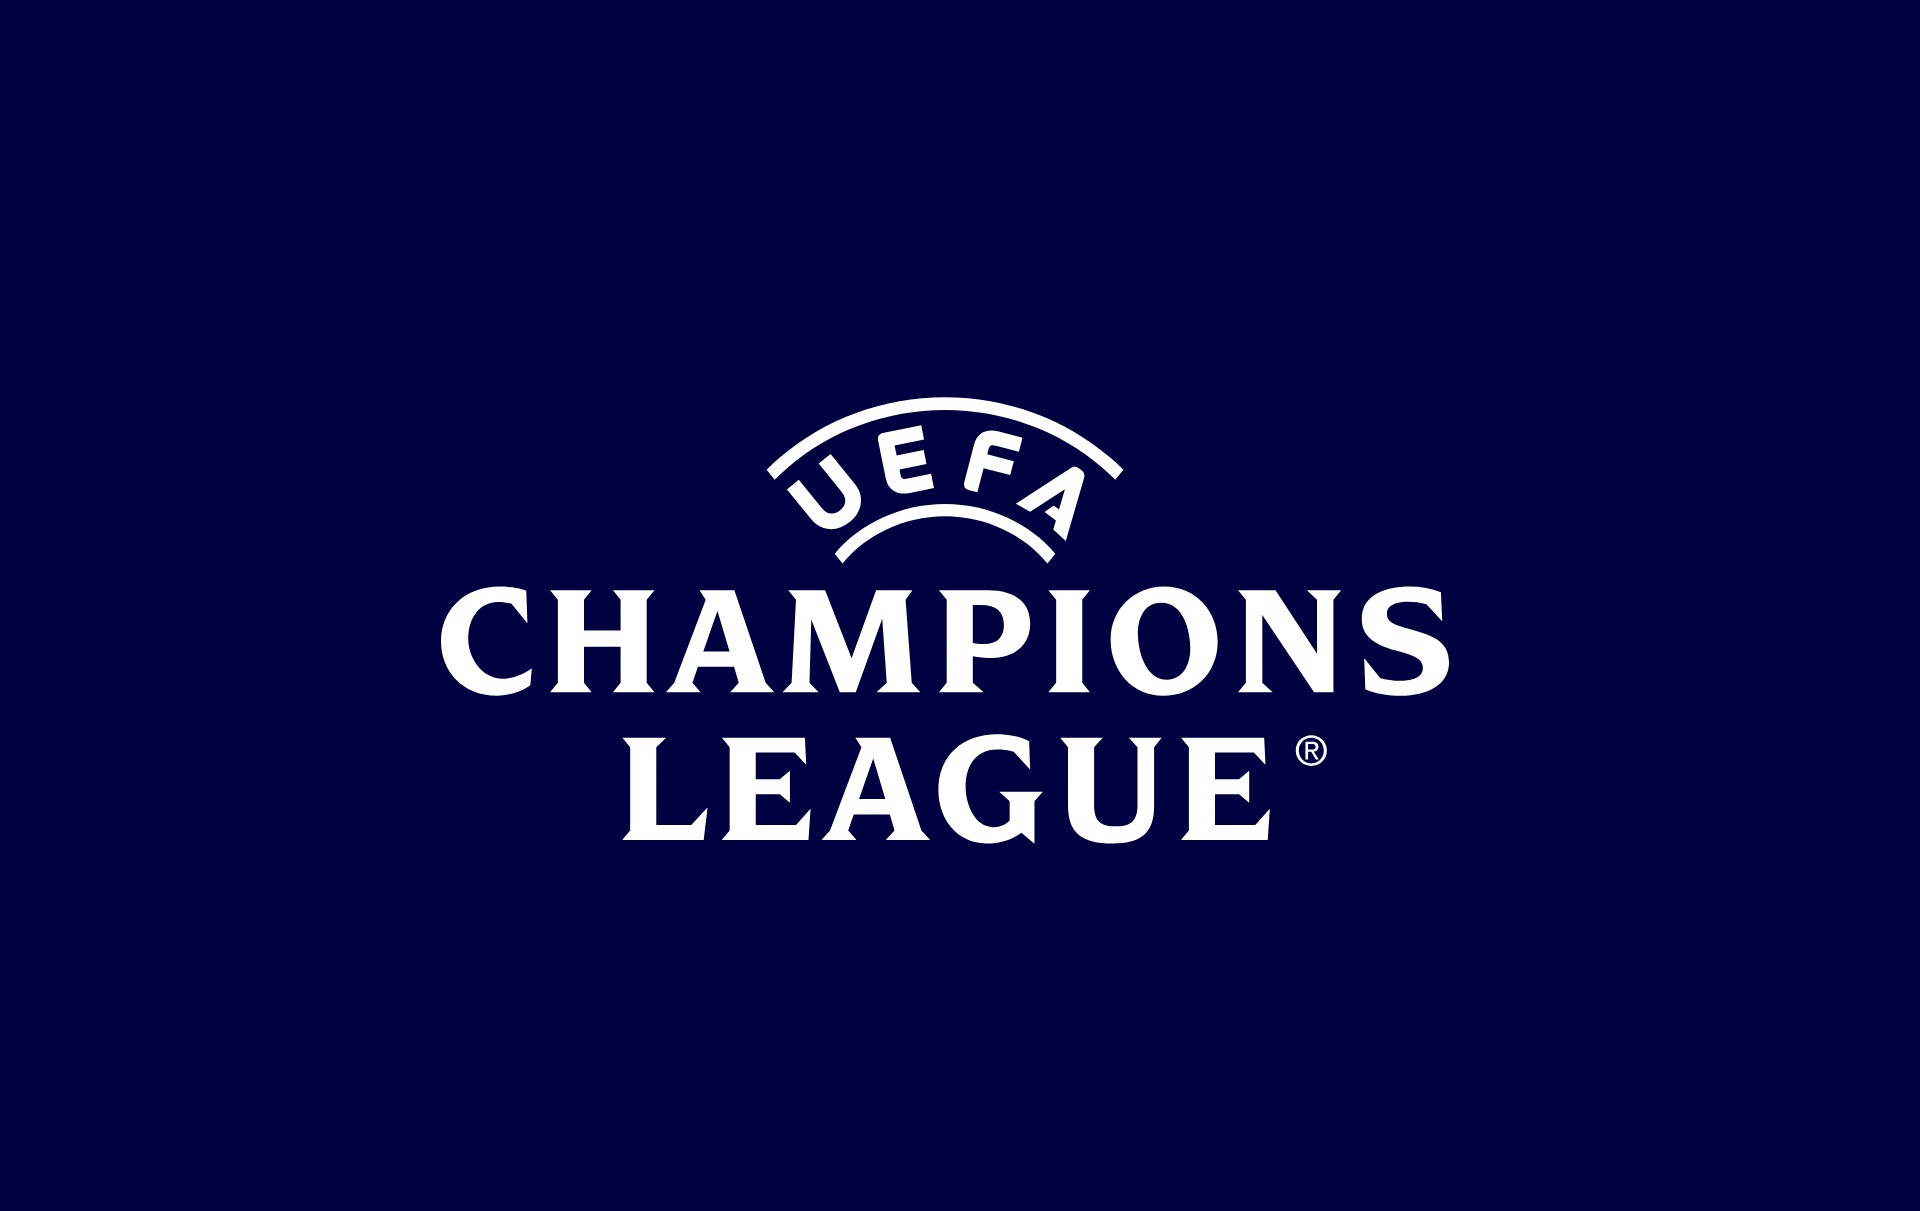 Jadwal Liga Champions Match Day 5: Galatasaray vs Manchester United Bakal Seru